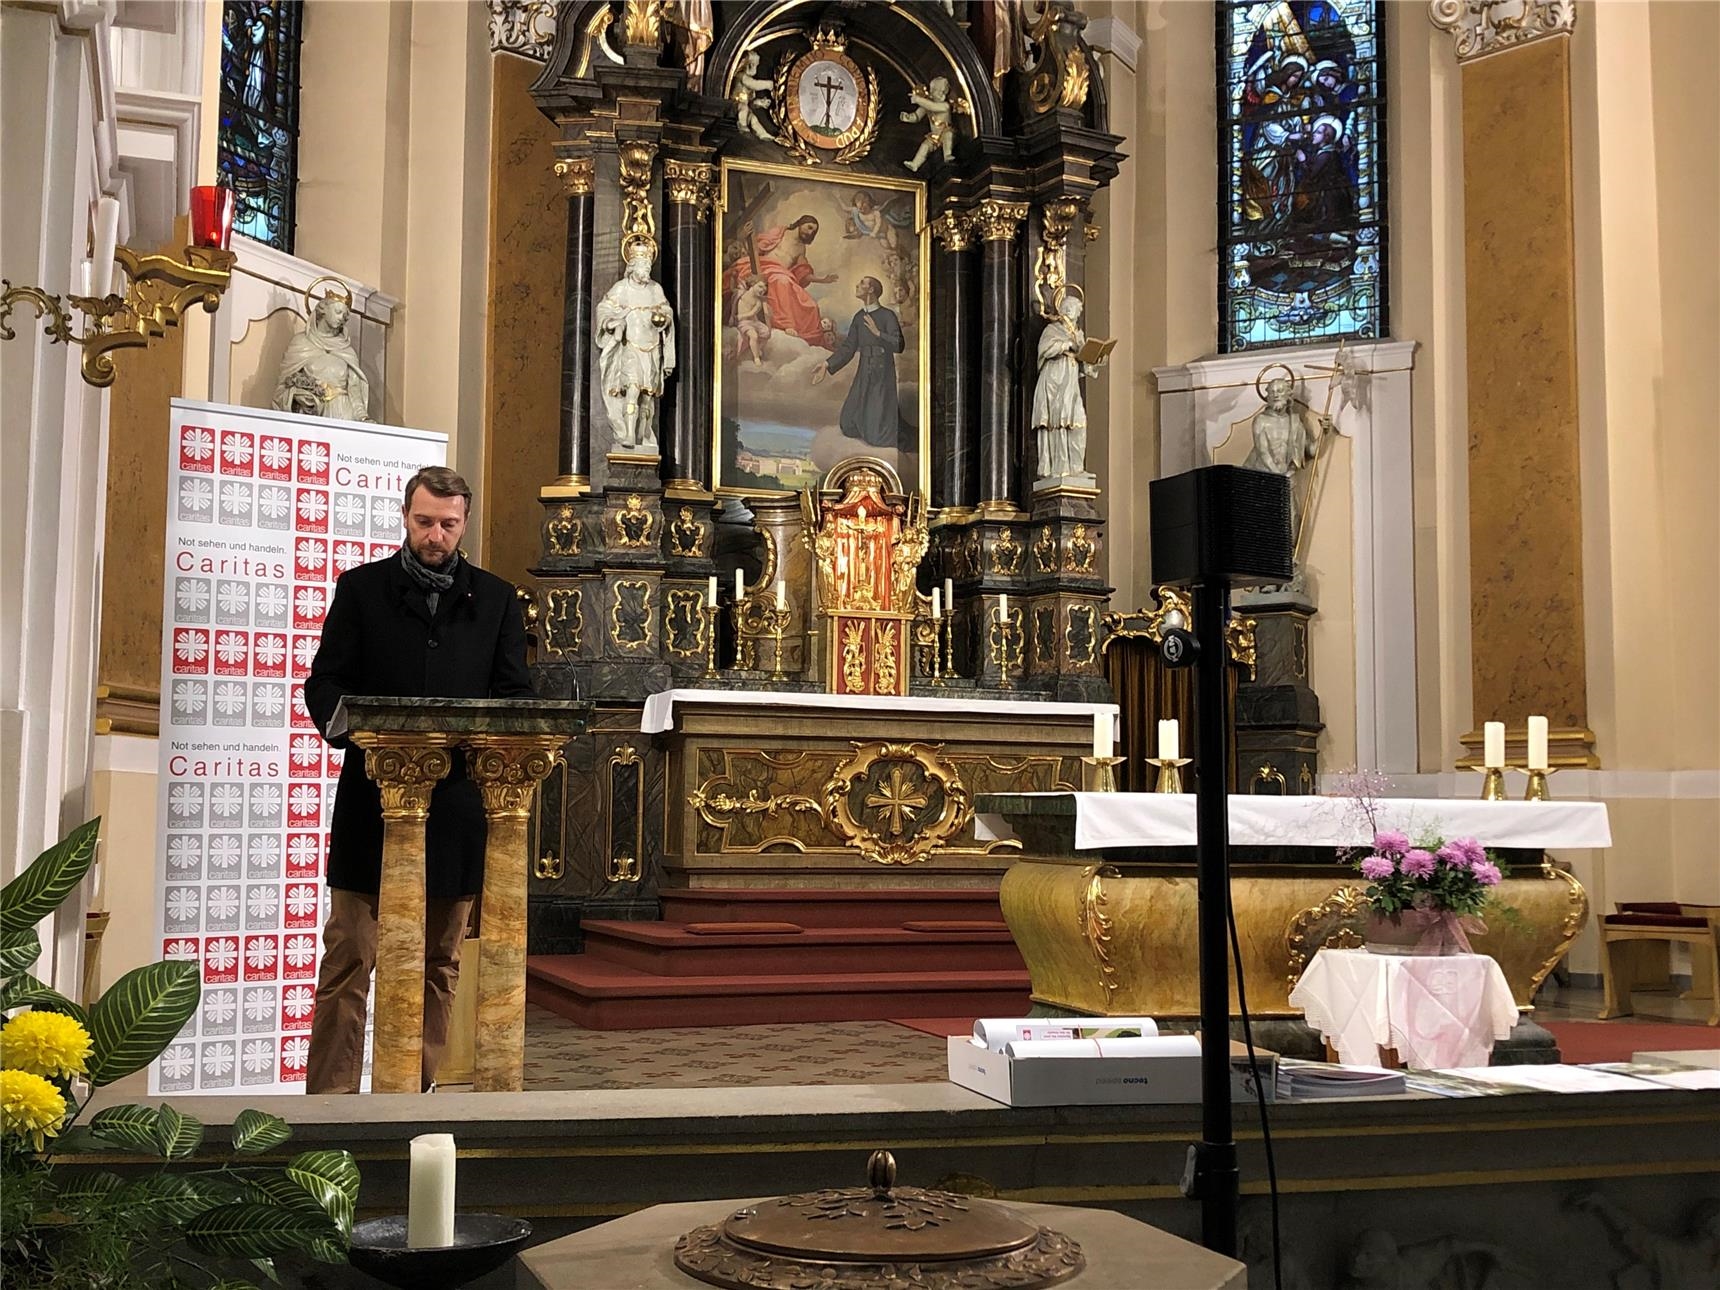 Caritasvorstand Raymund Hahn hält ein Grußwort in der St. Gerhardus Kirche (© Caritas Erfurt)